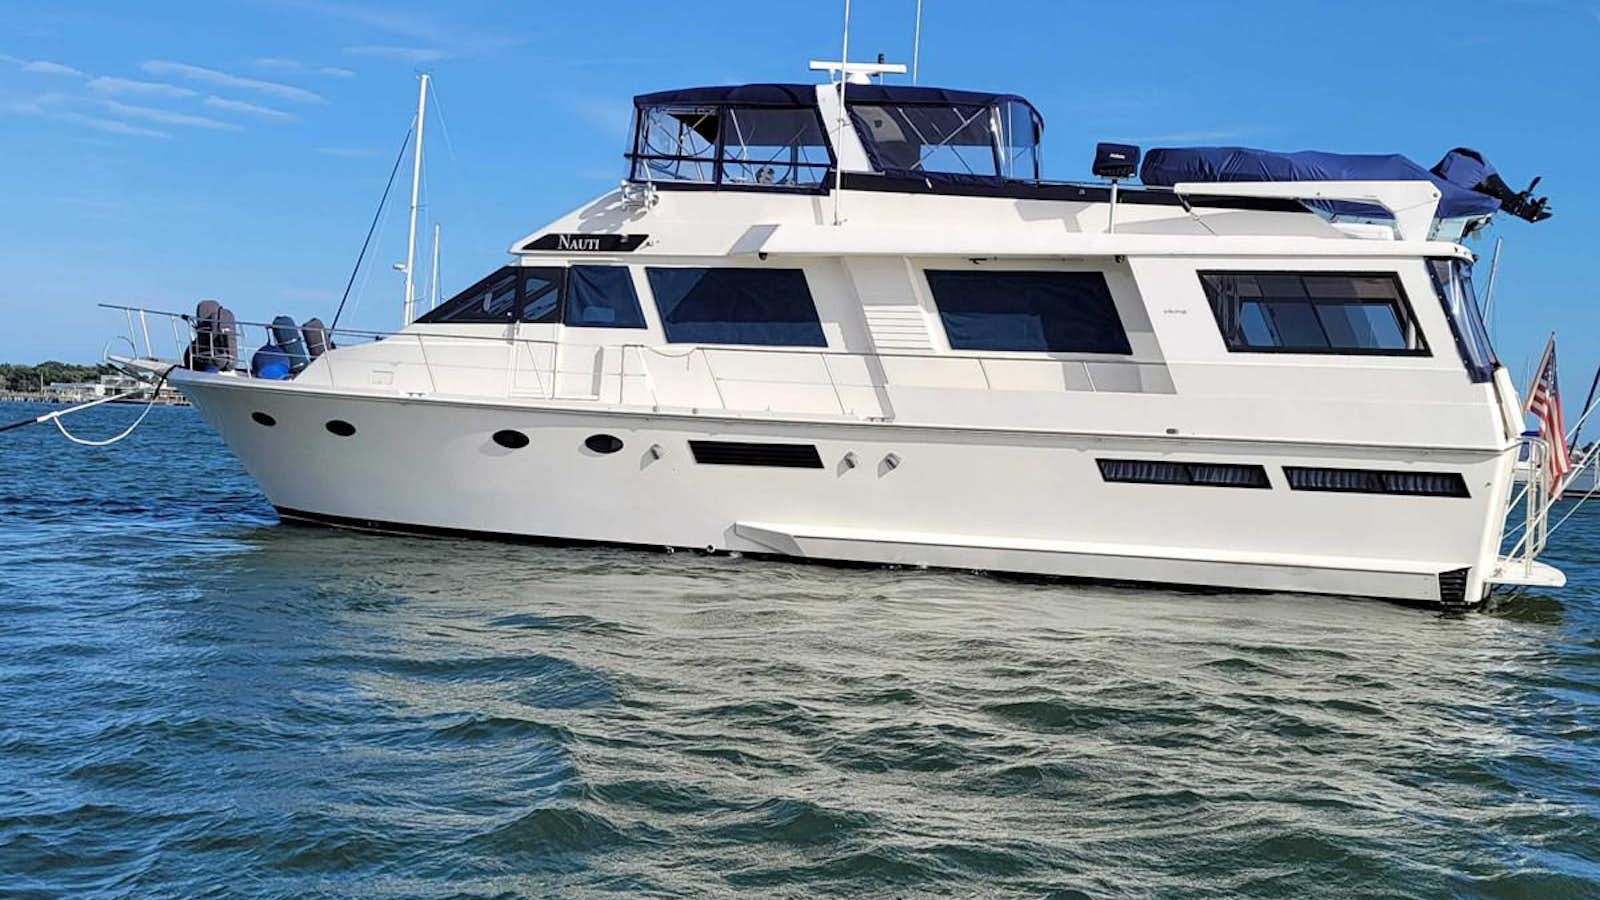 Nauti
Yacht for Sale